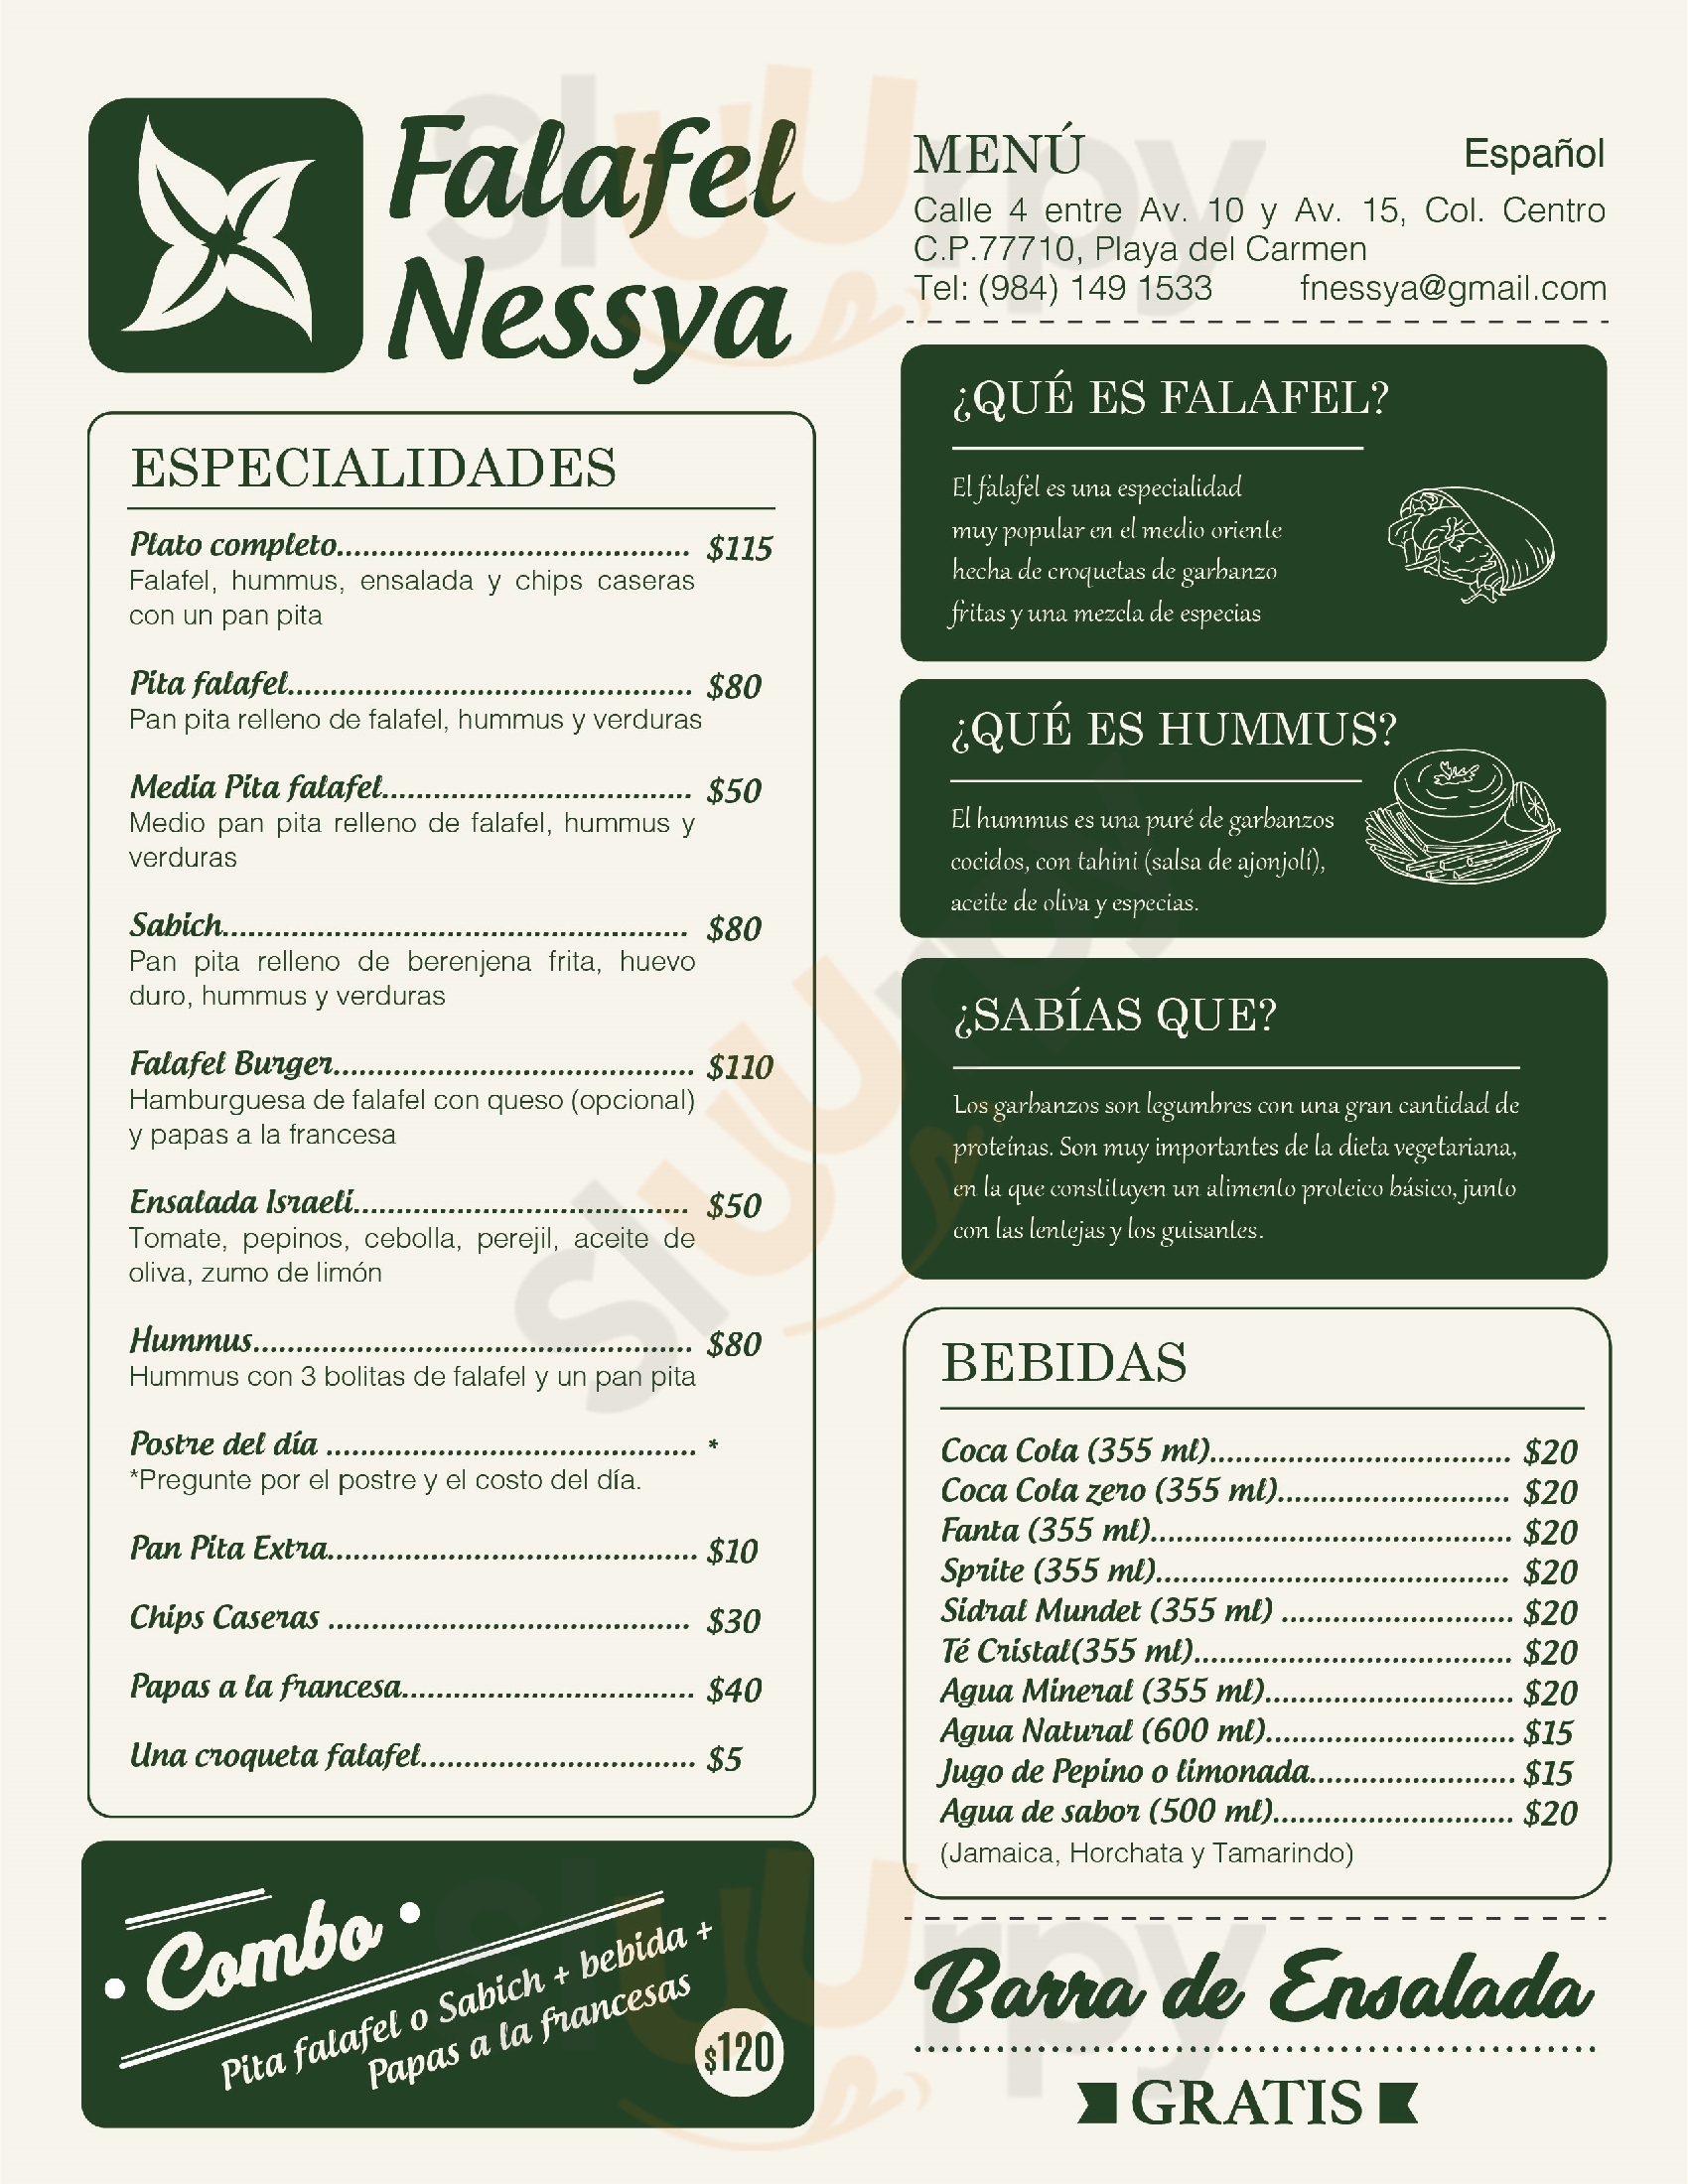 Falafel Nessya Playa del Carmen Menu - 1